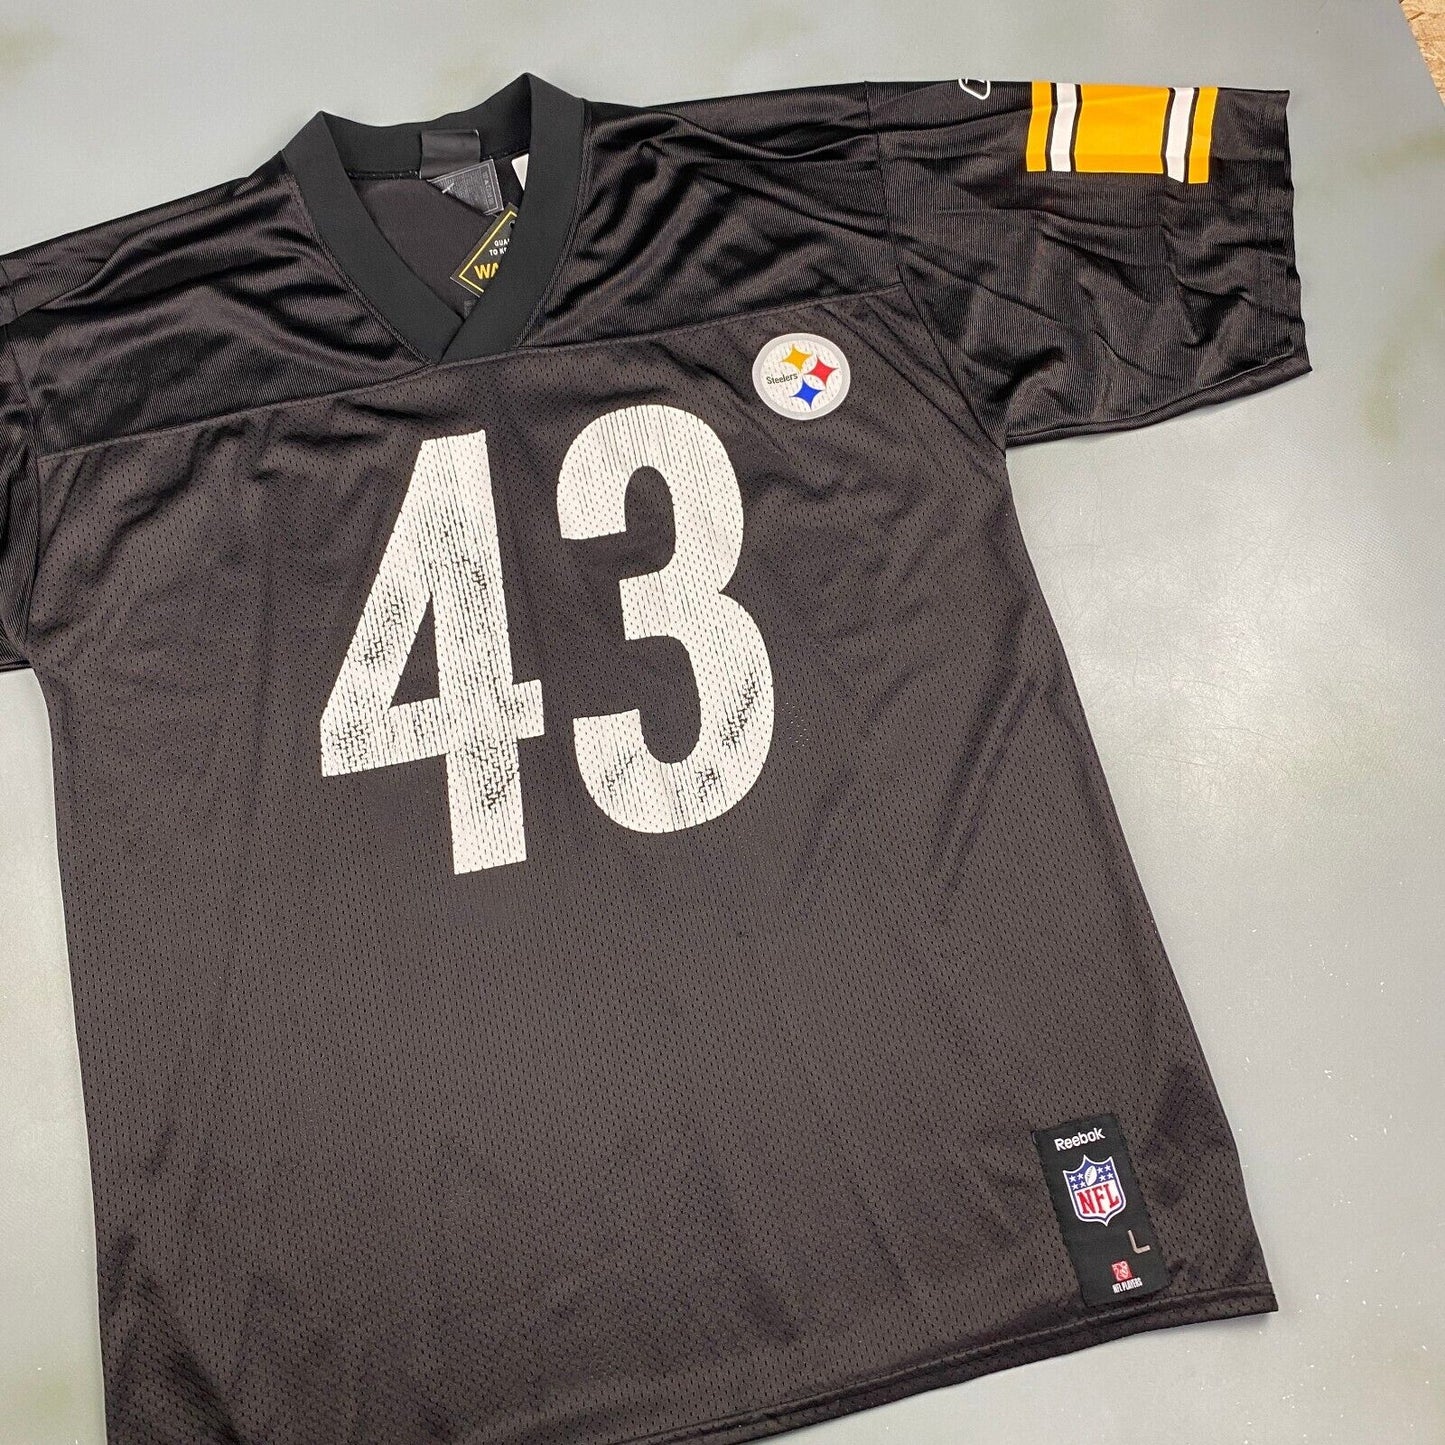 VINTAGE NFL Pittsburgh Steelers #43 Reebok Football Jersey sz Large Adult